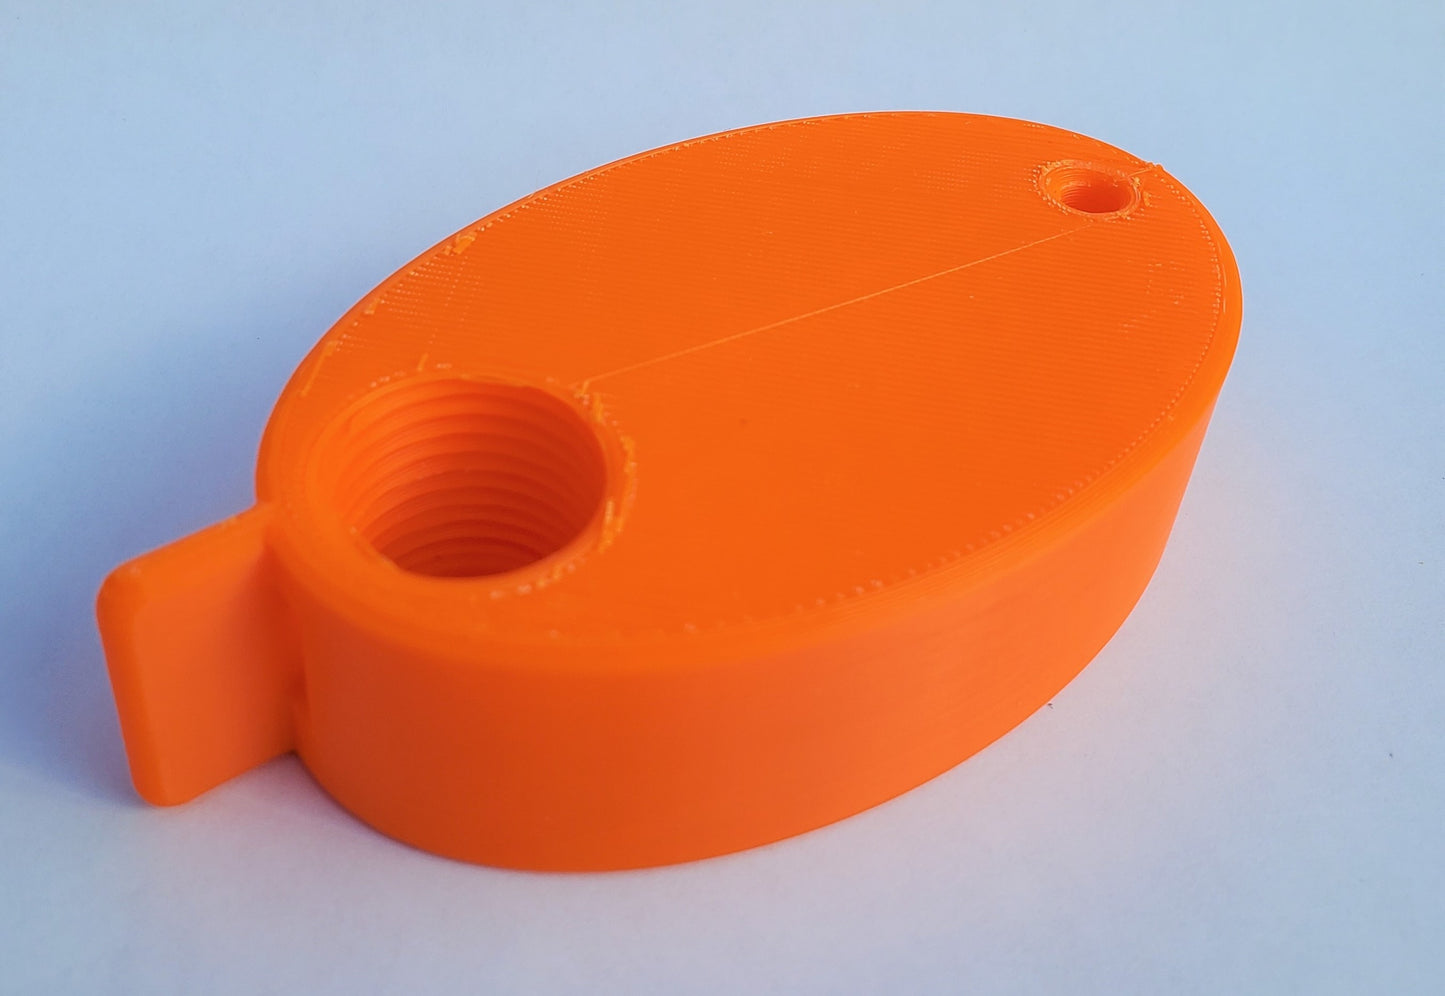 PlugKeyper Plug Float - orange - boat drain plug reminder - key float - locks key in device using plug